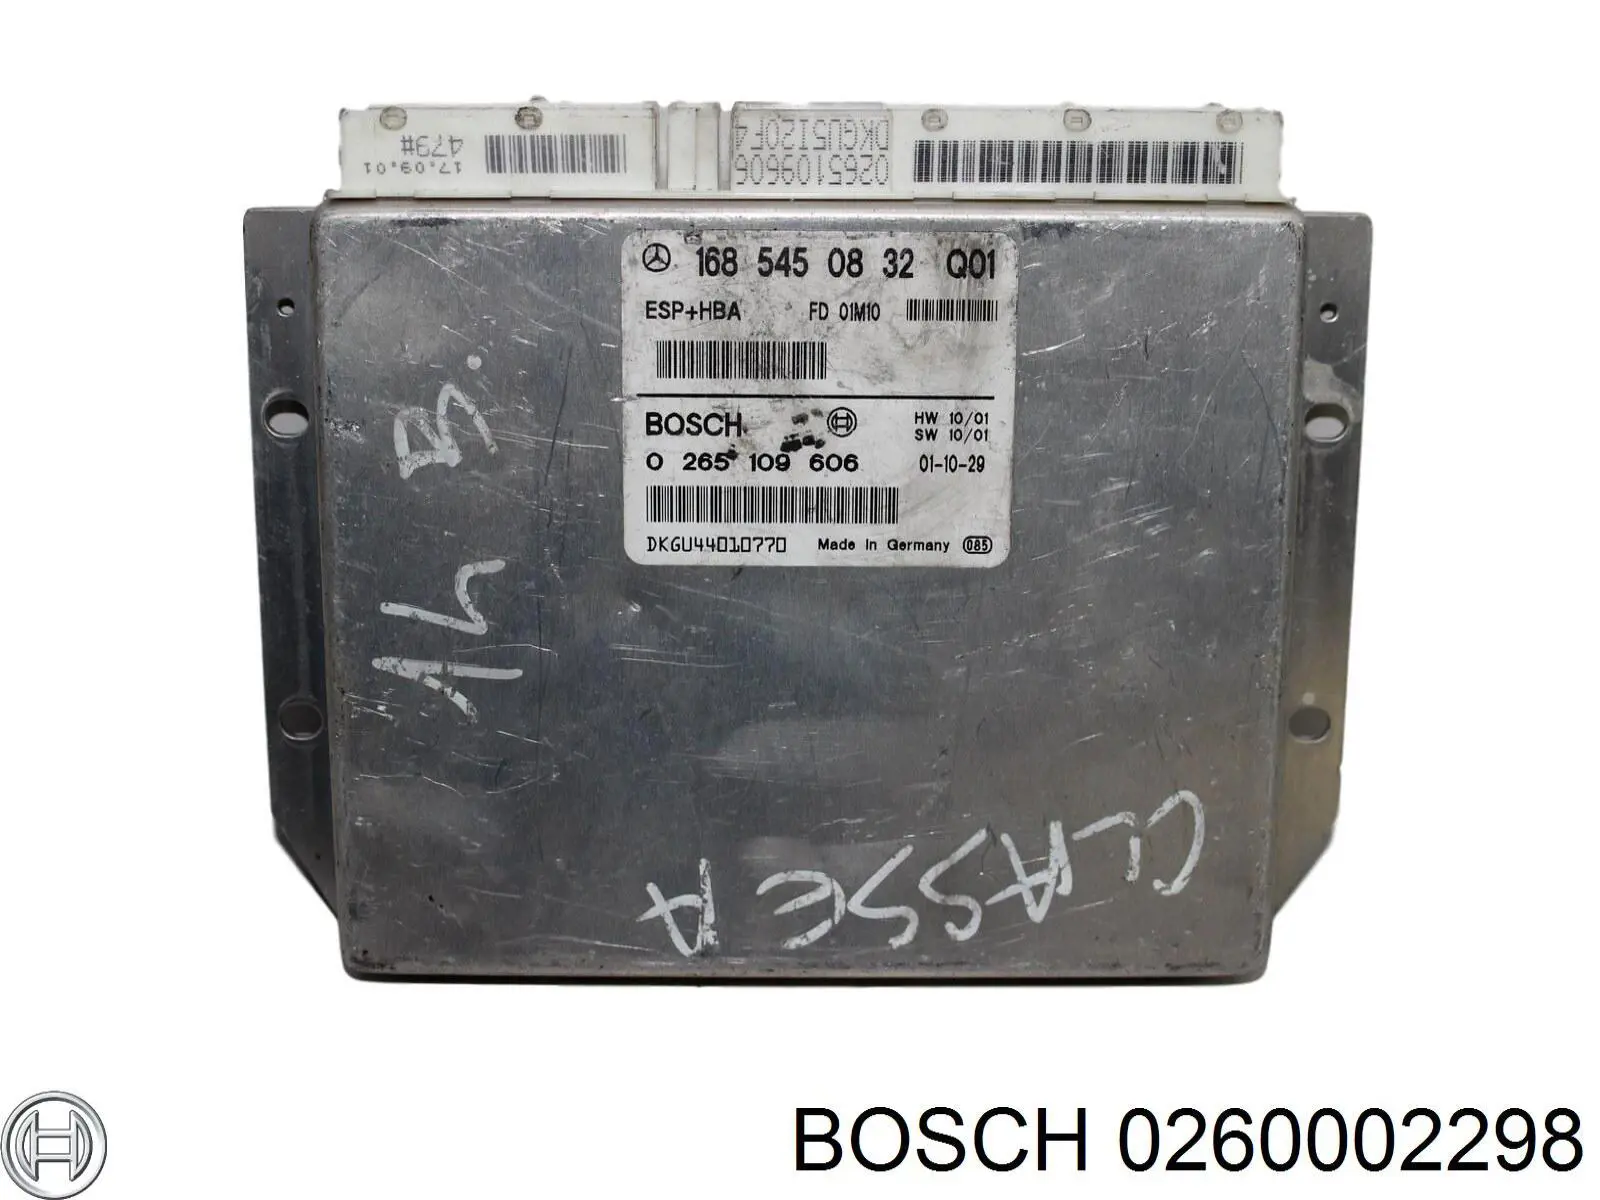 0260002298 Bosch modulo de control electronico (ecu)